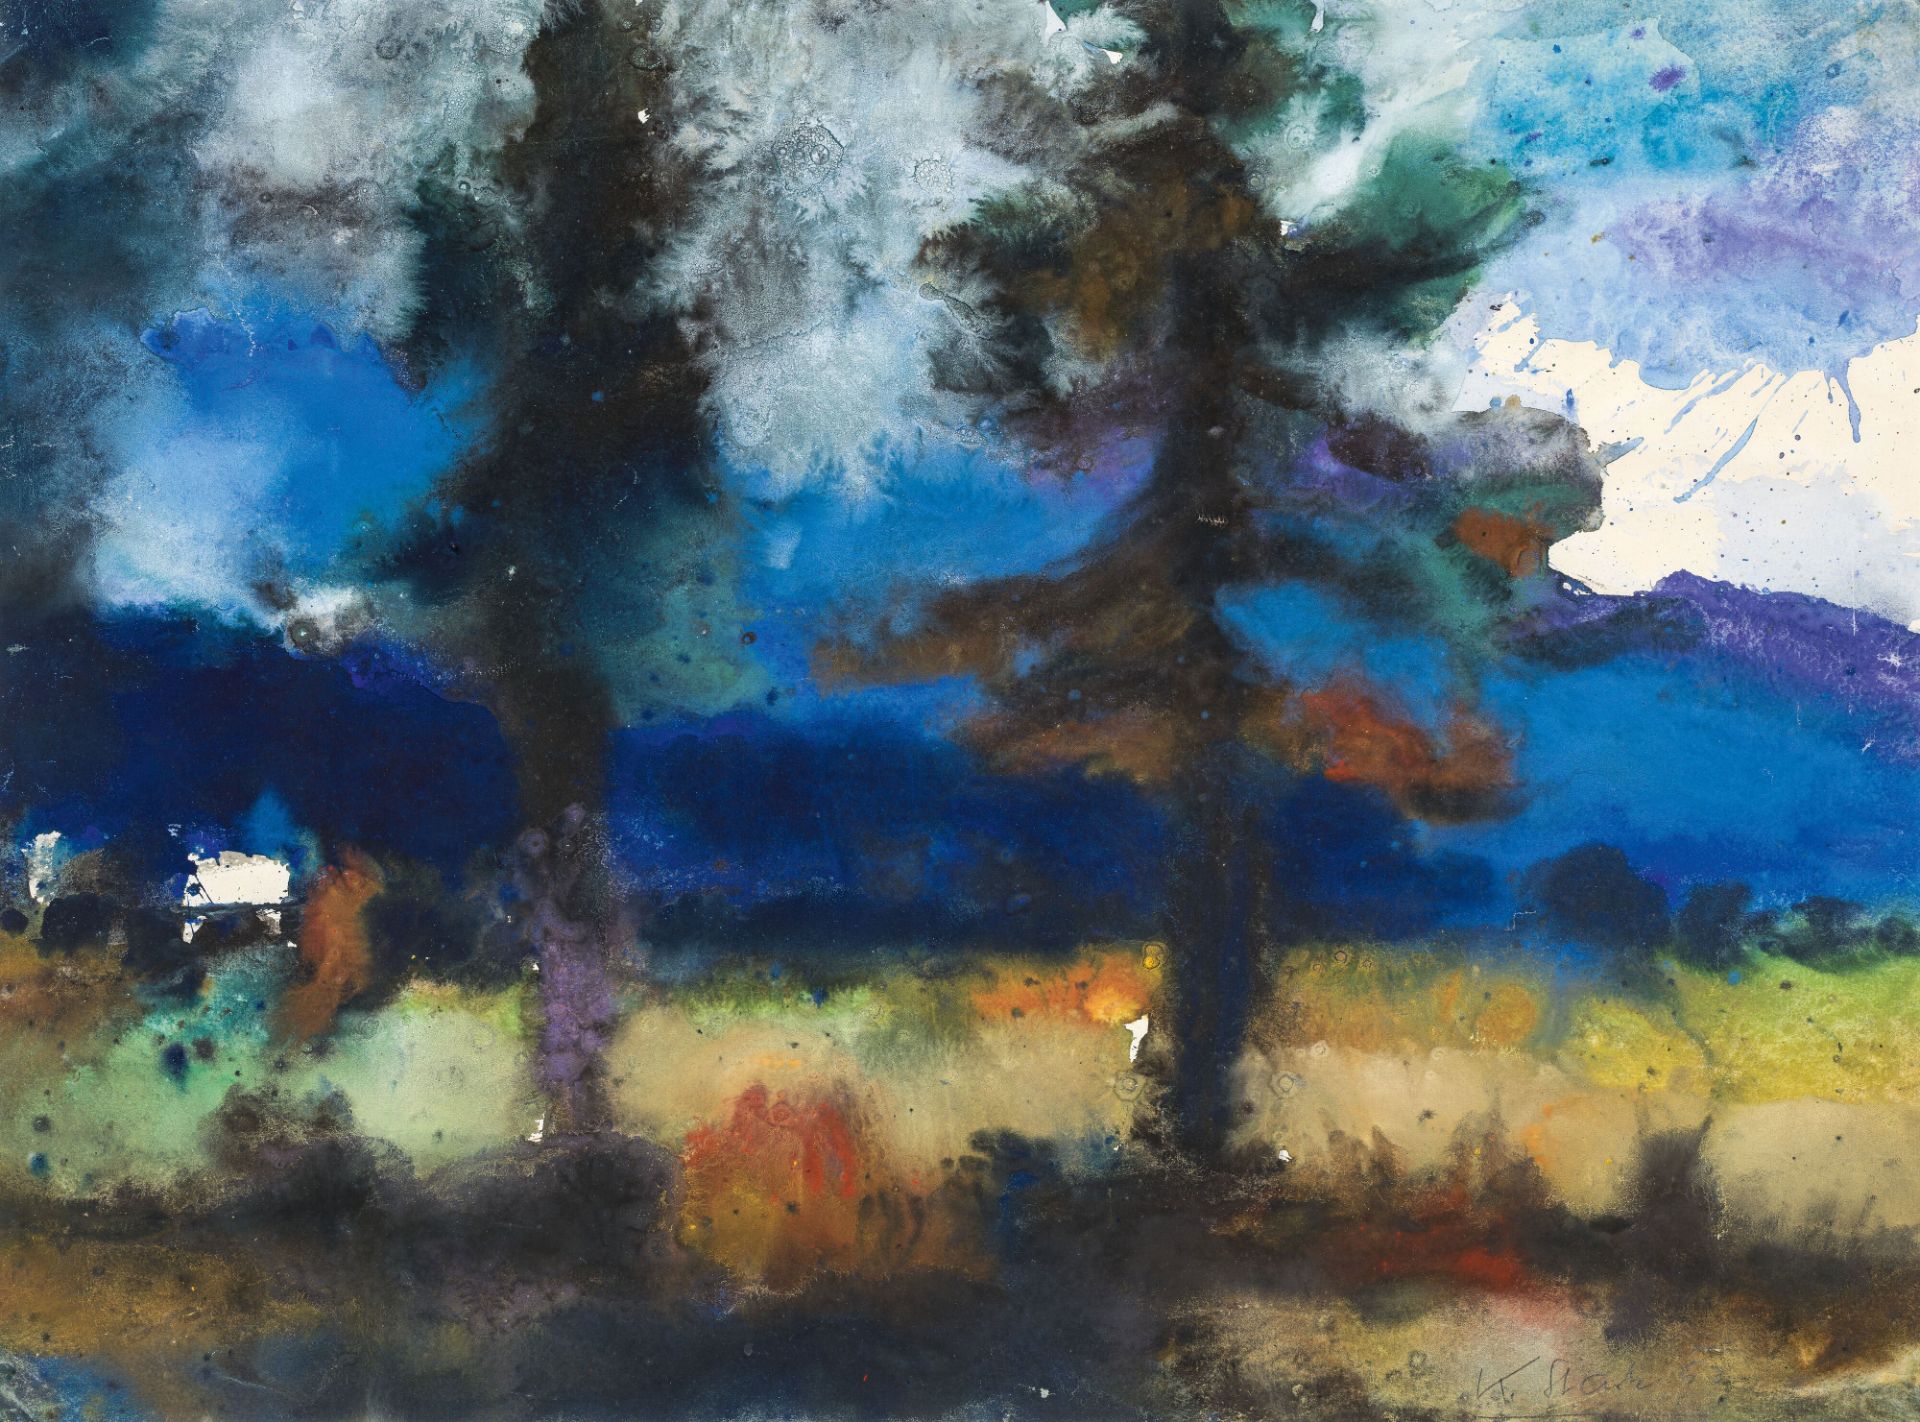 Karl Stark: Landscape with trees